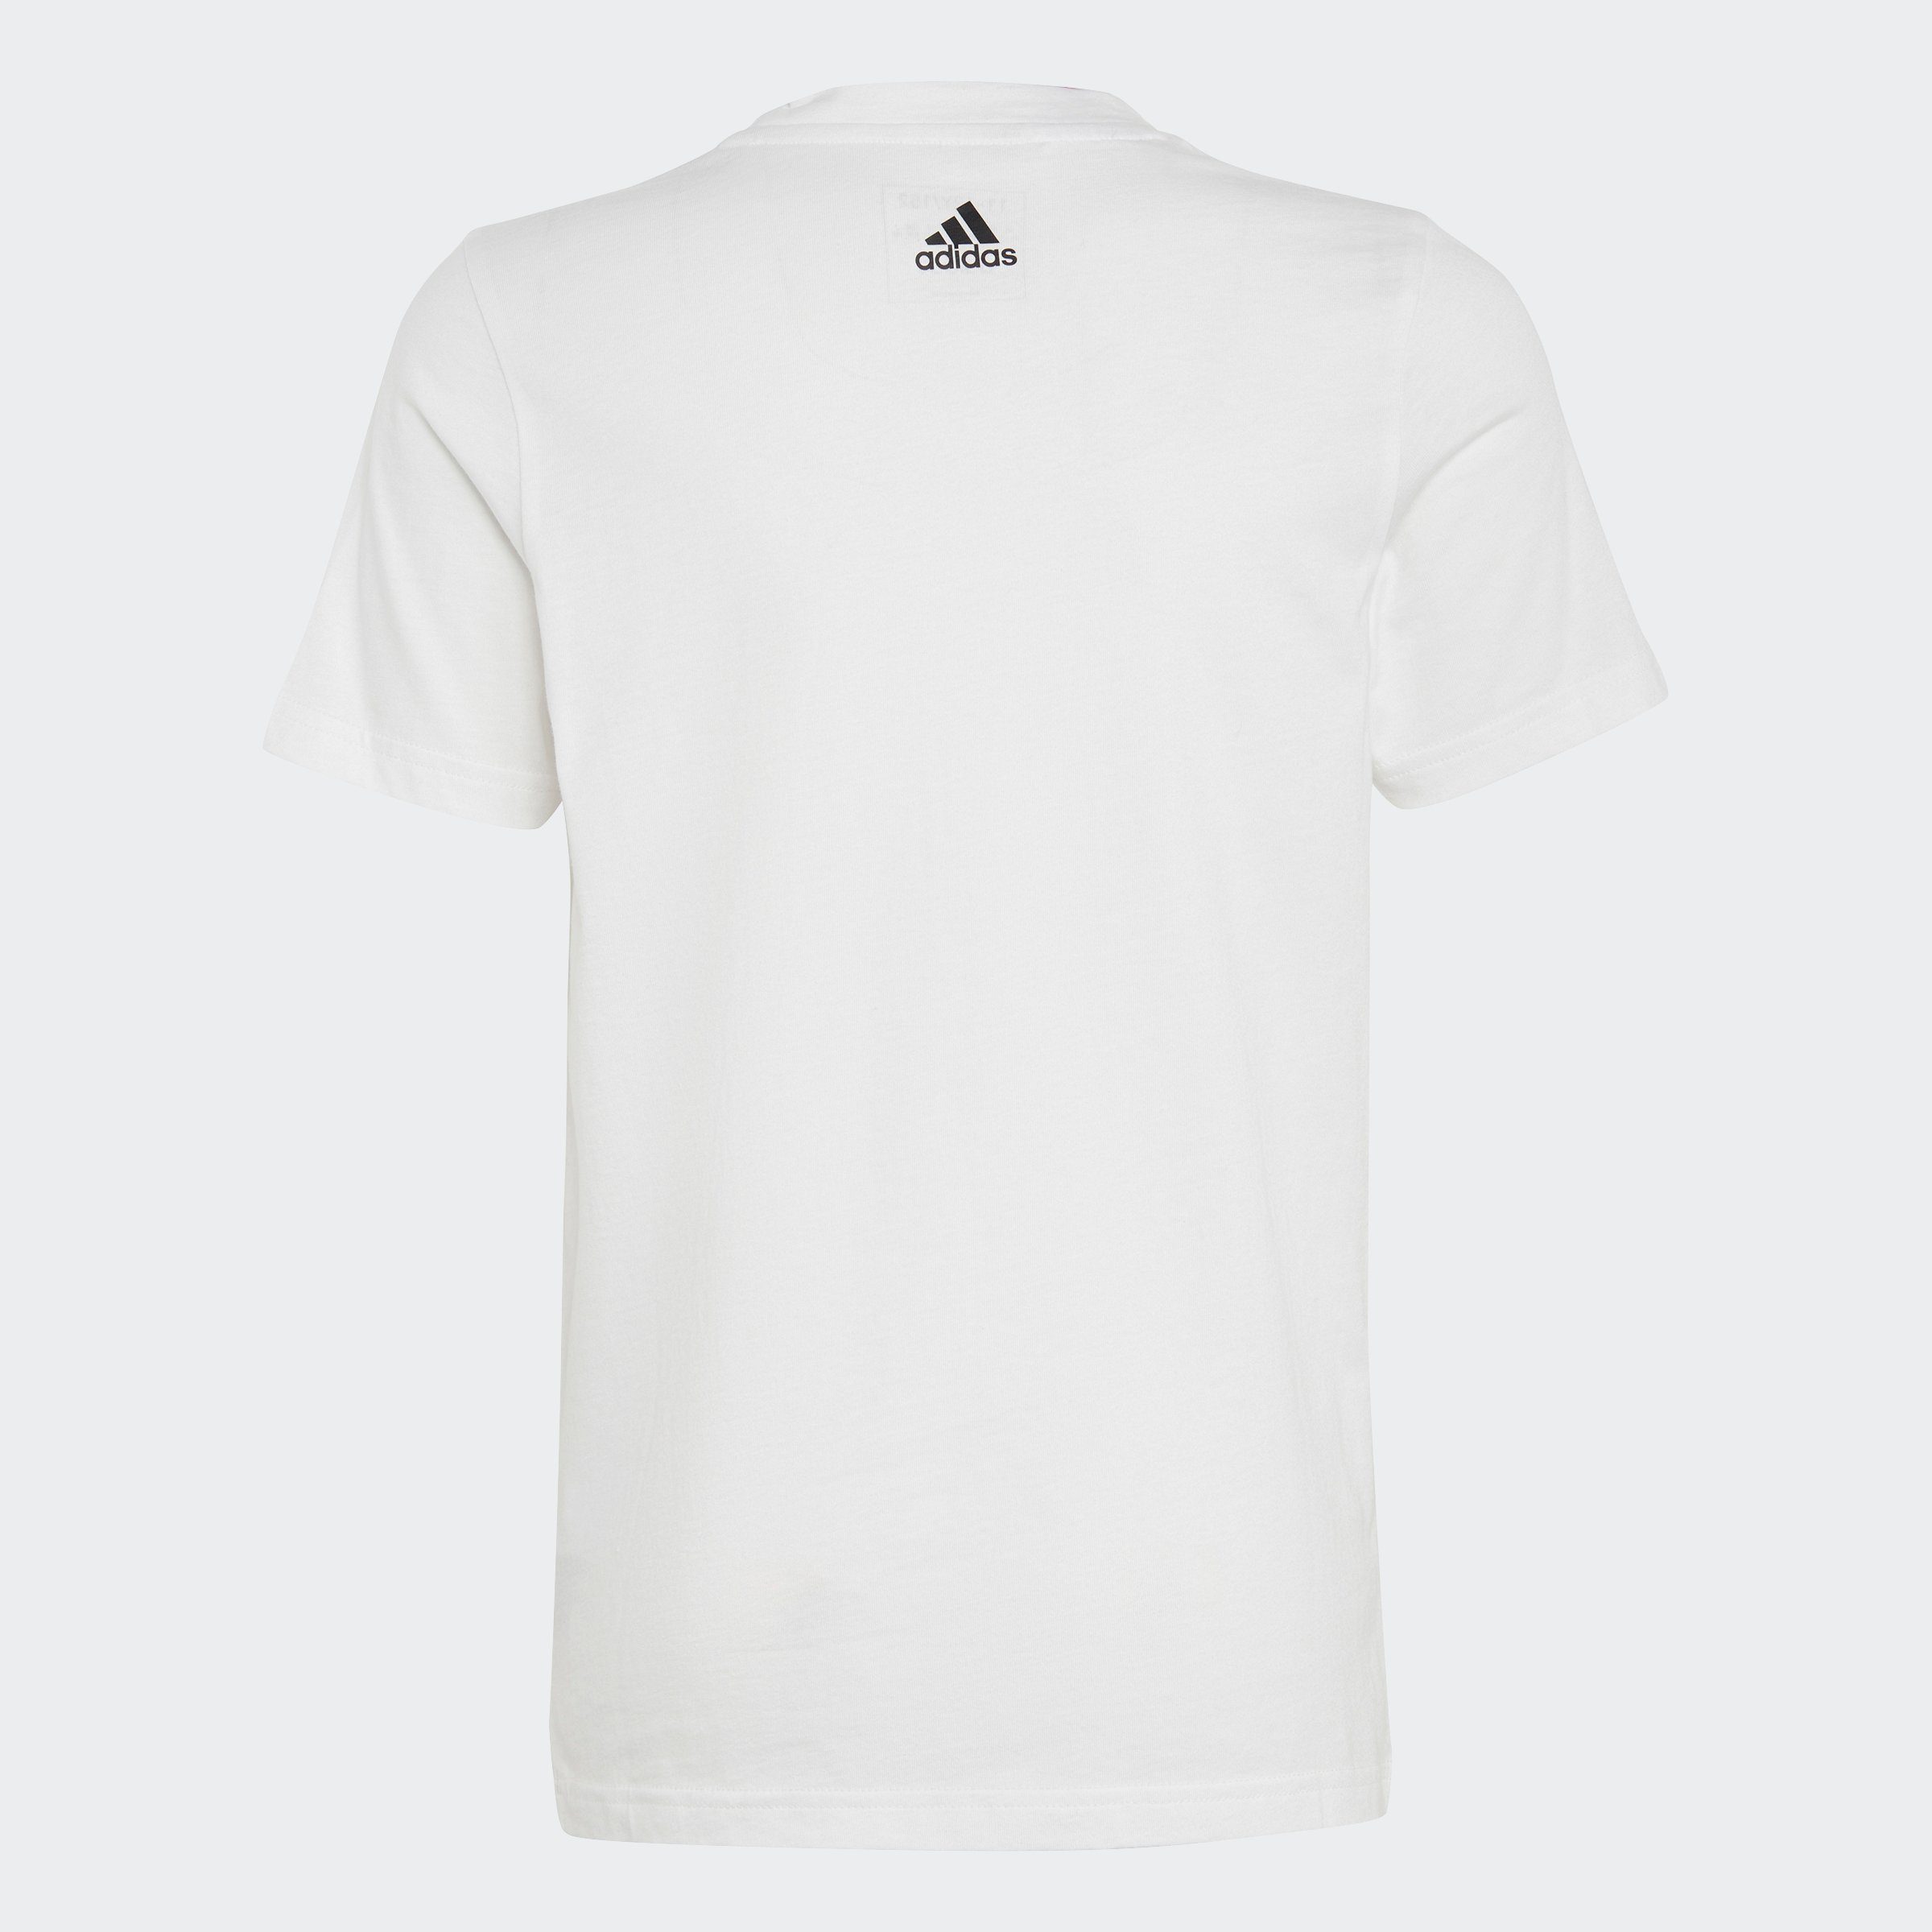 LINEAR / adidas COTTON Sportswear White T-Shirt LOGO ESSENTIALS Black